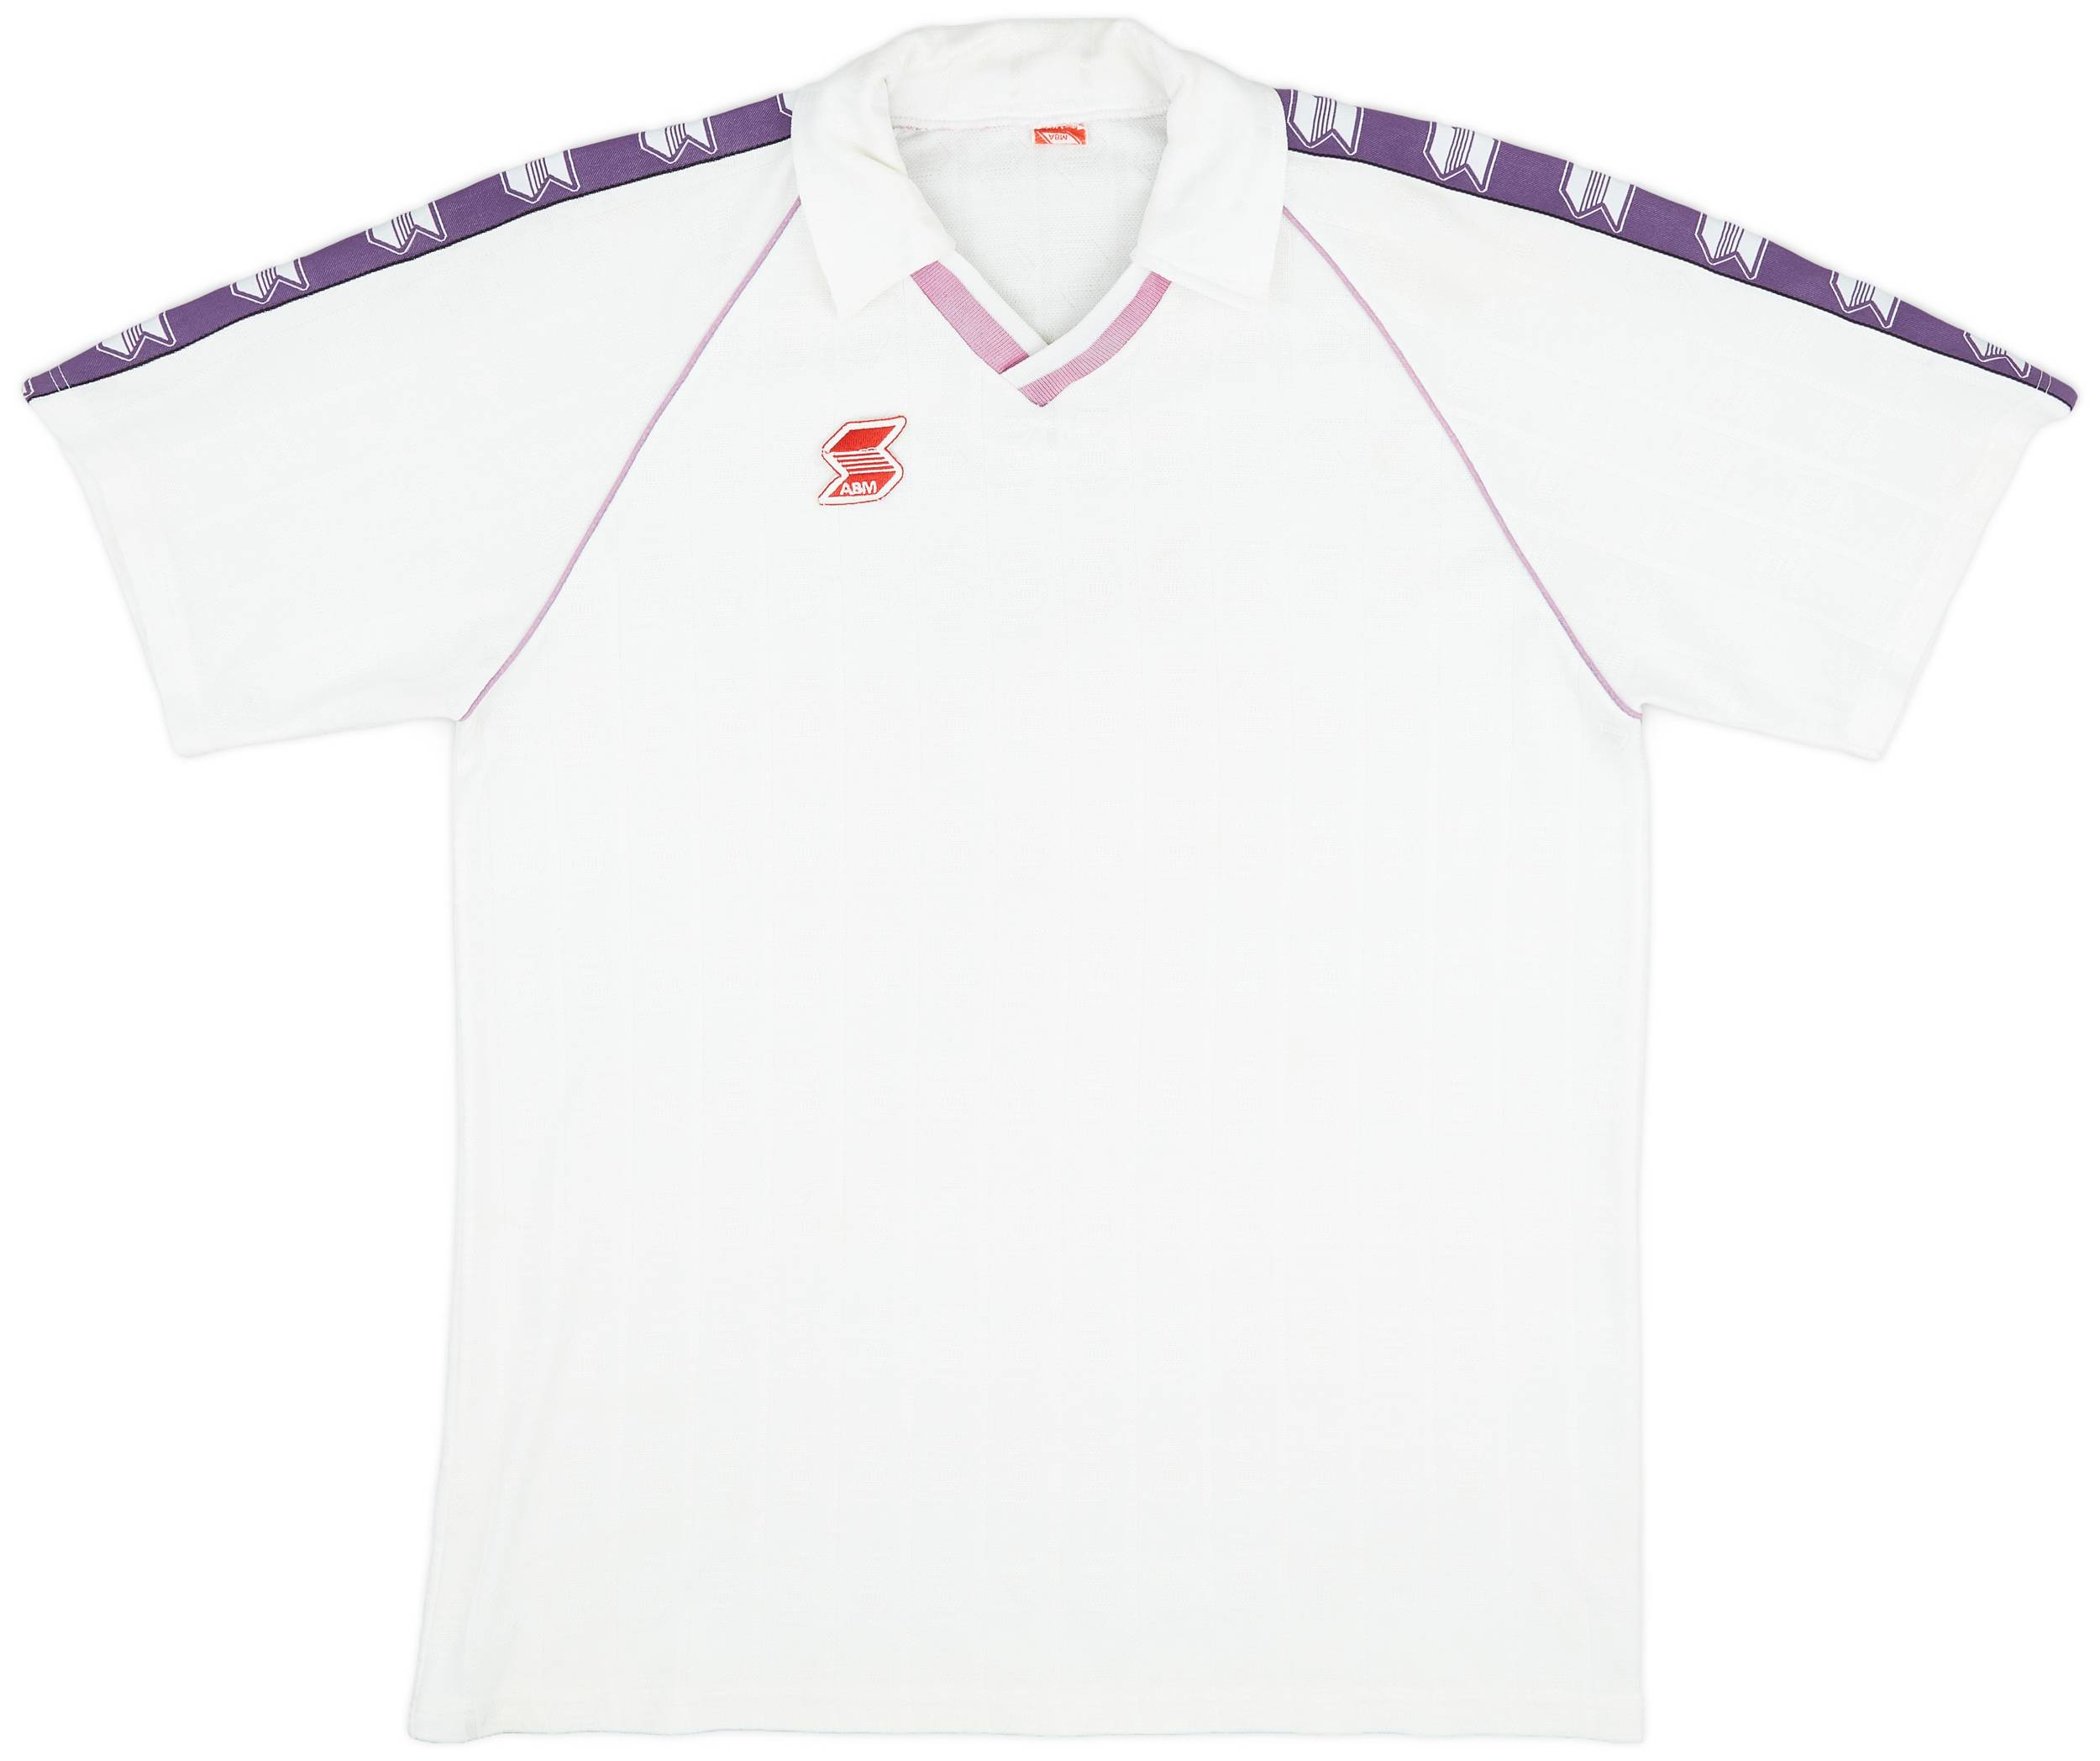 1990s ABM Template Shirt - 9/10 - (L)